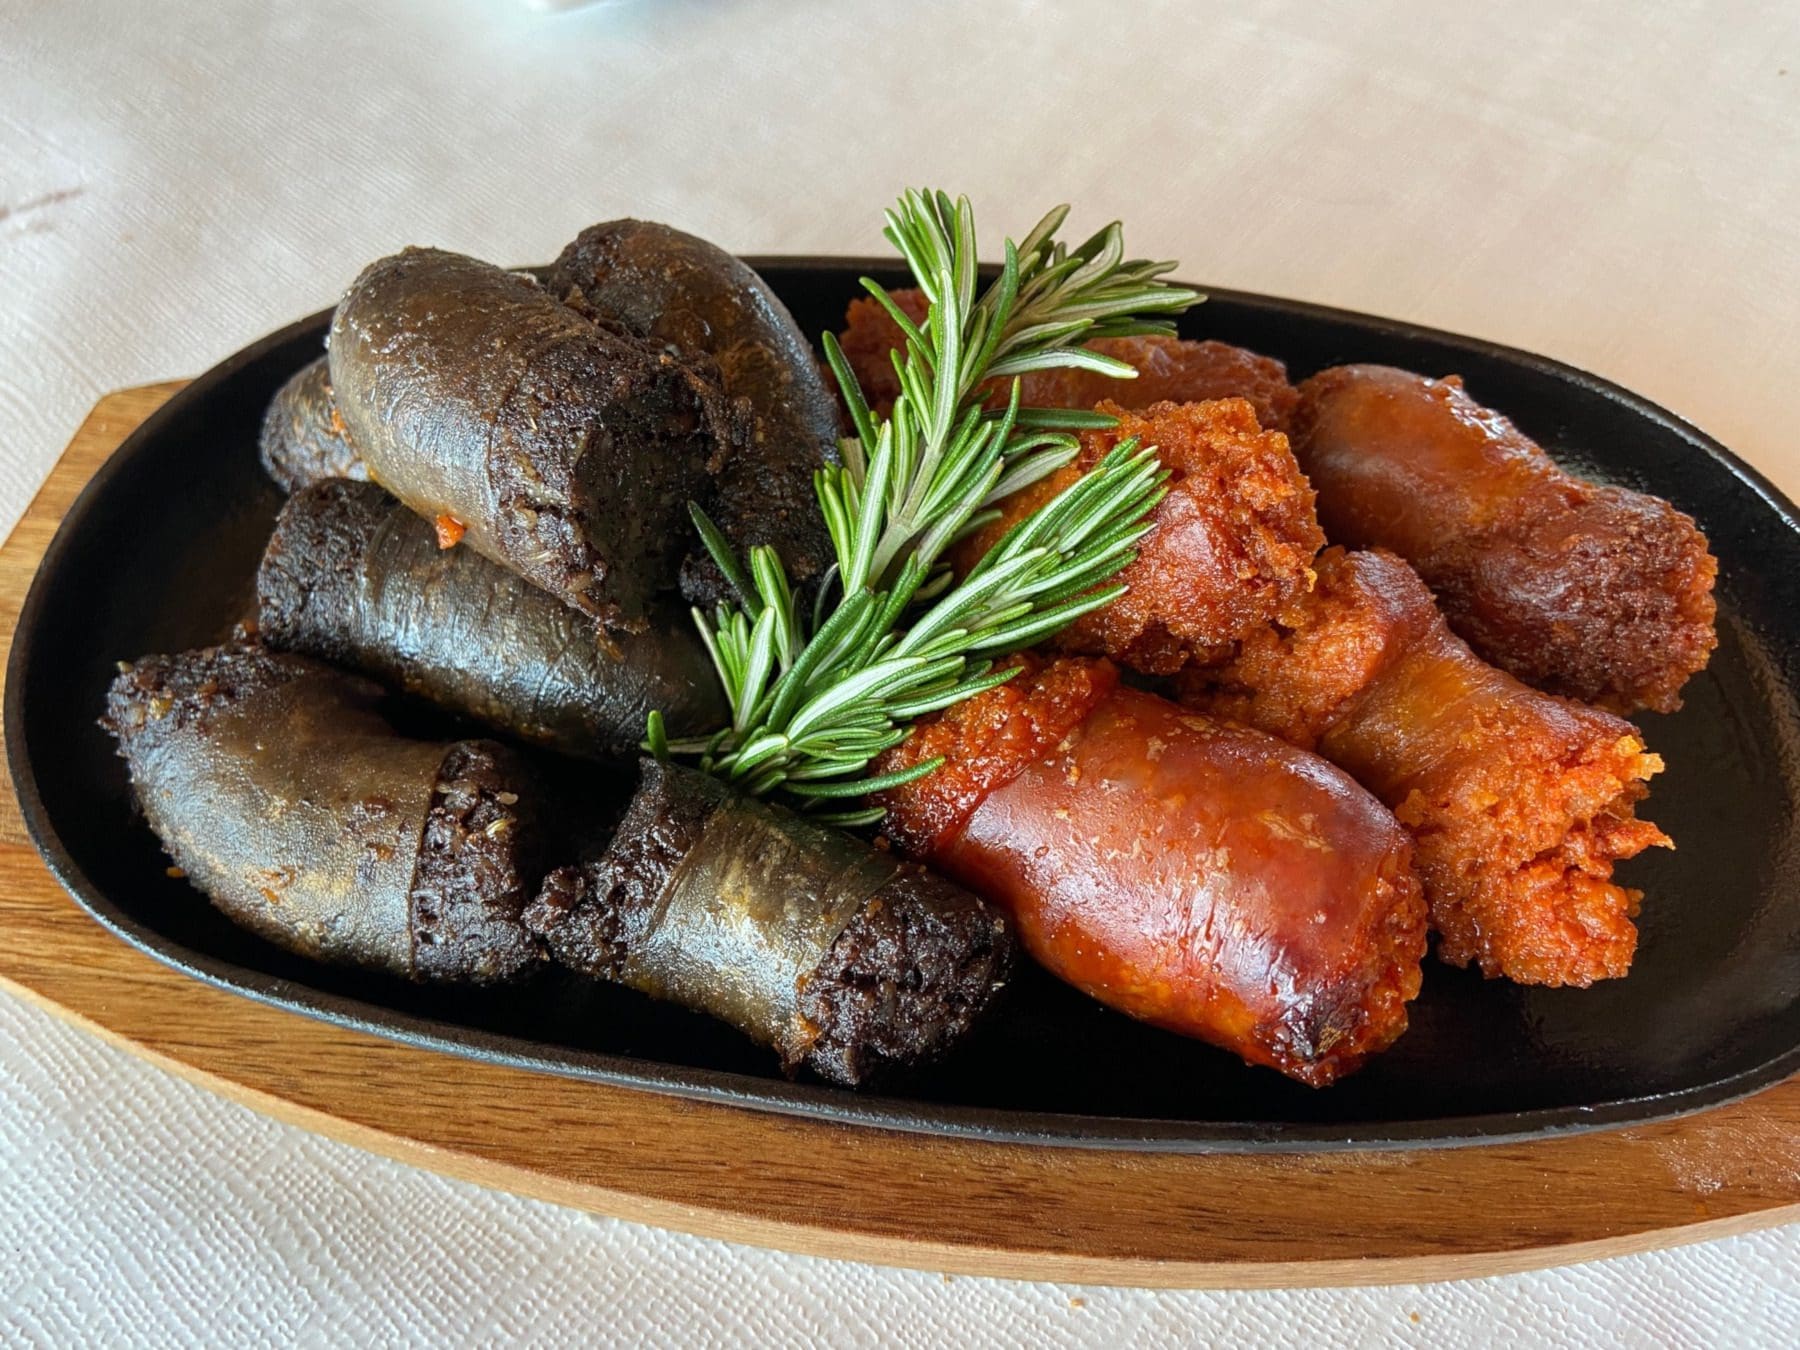 Menorca, European Region of Gastronomy 2022